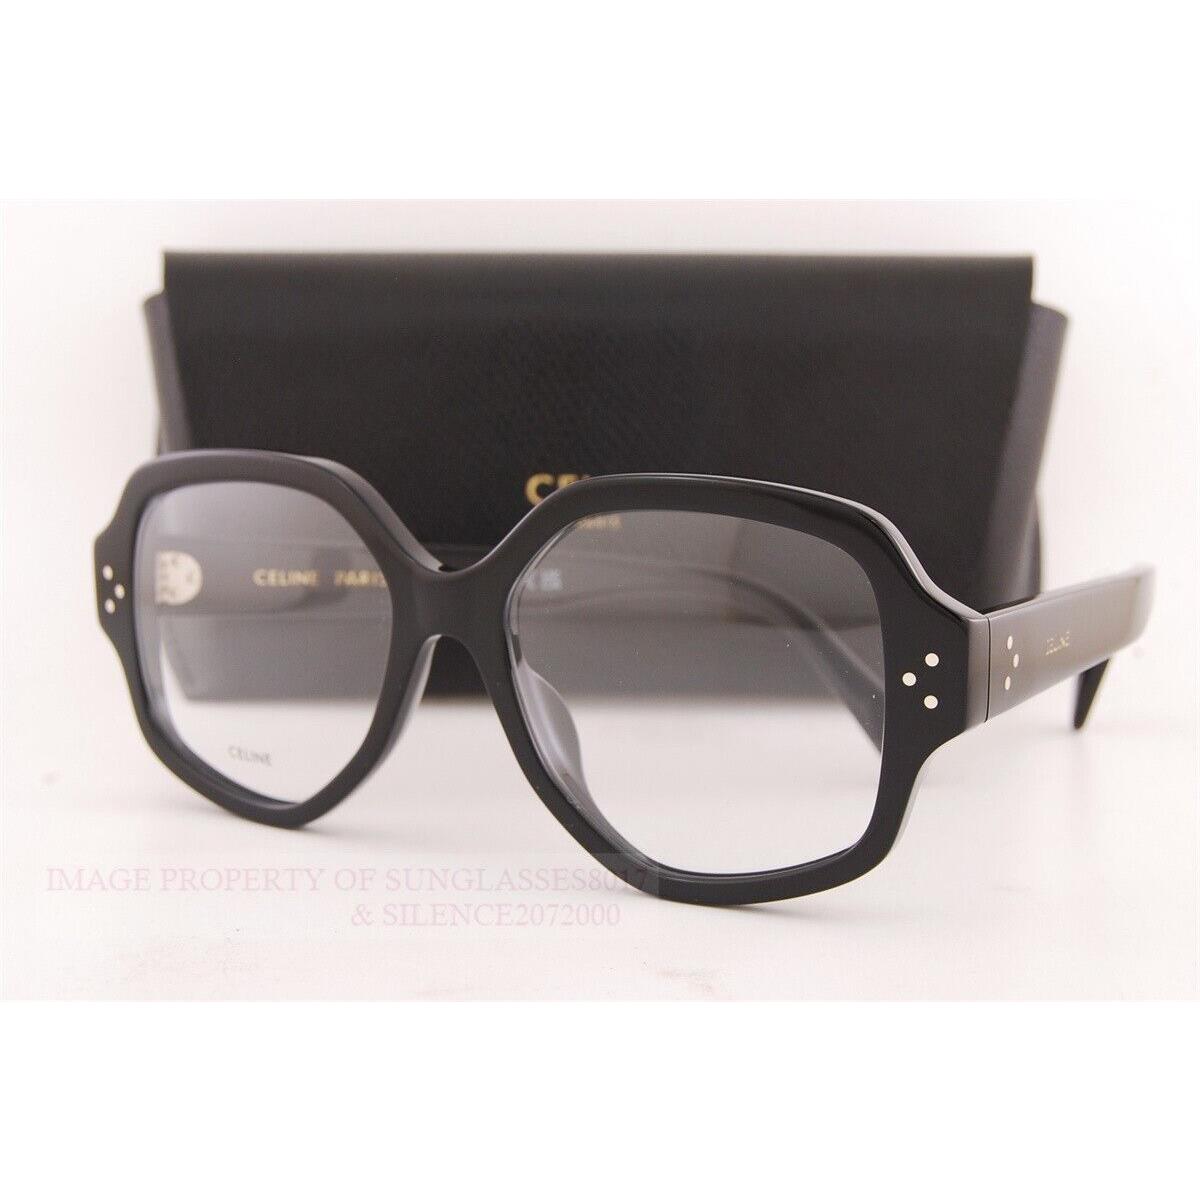 Celine Eyeglass Frames CL 50135I 001 Black For Men Women Size 53mm